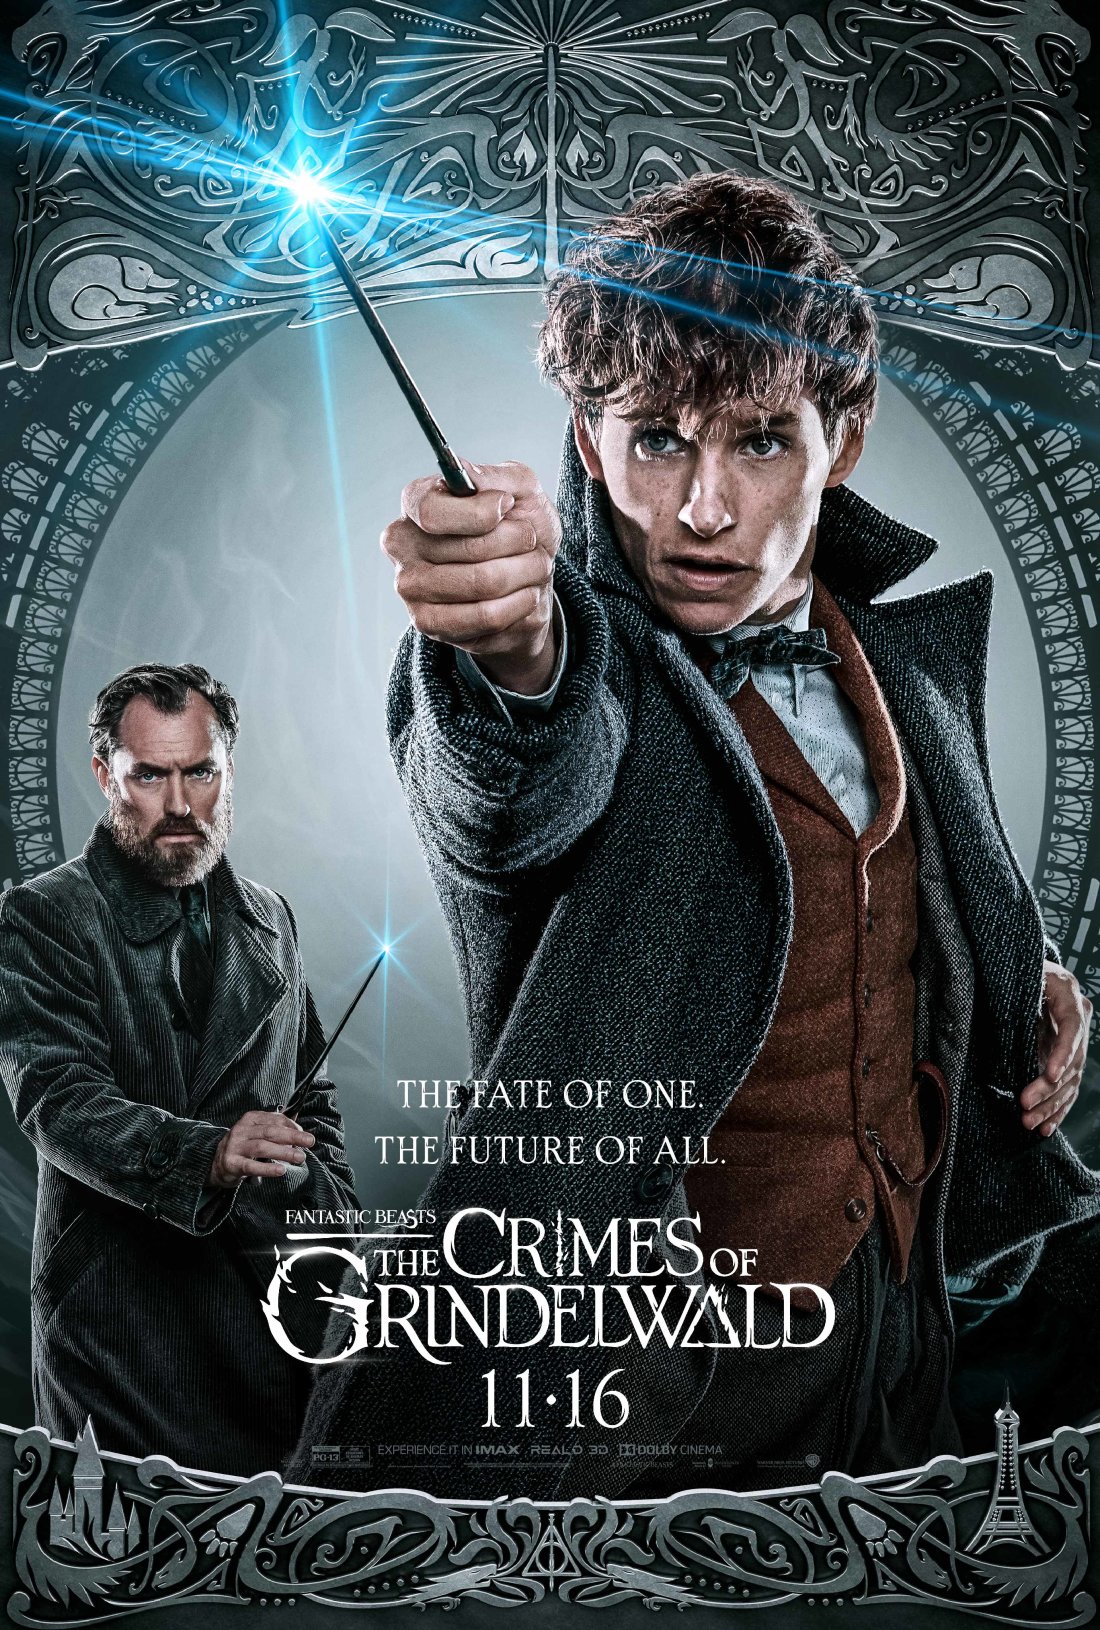 Fantastic Beasts The Crimes Of Grindelwald 2019 Poster Artwork Wallpapers